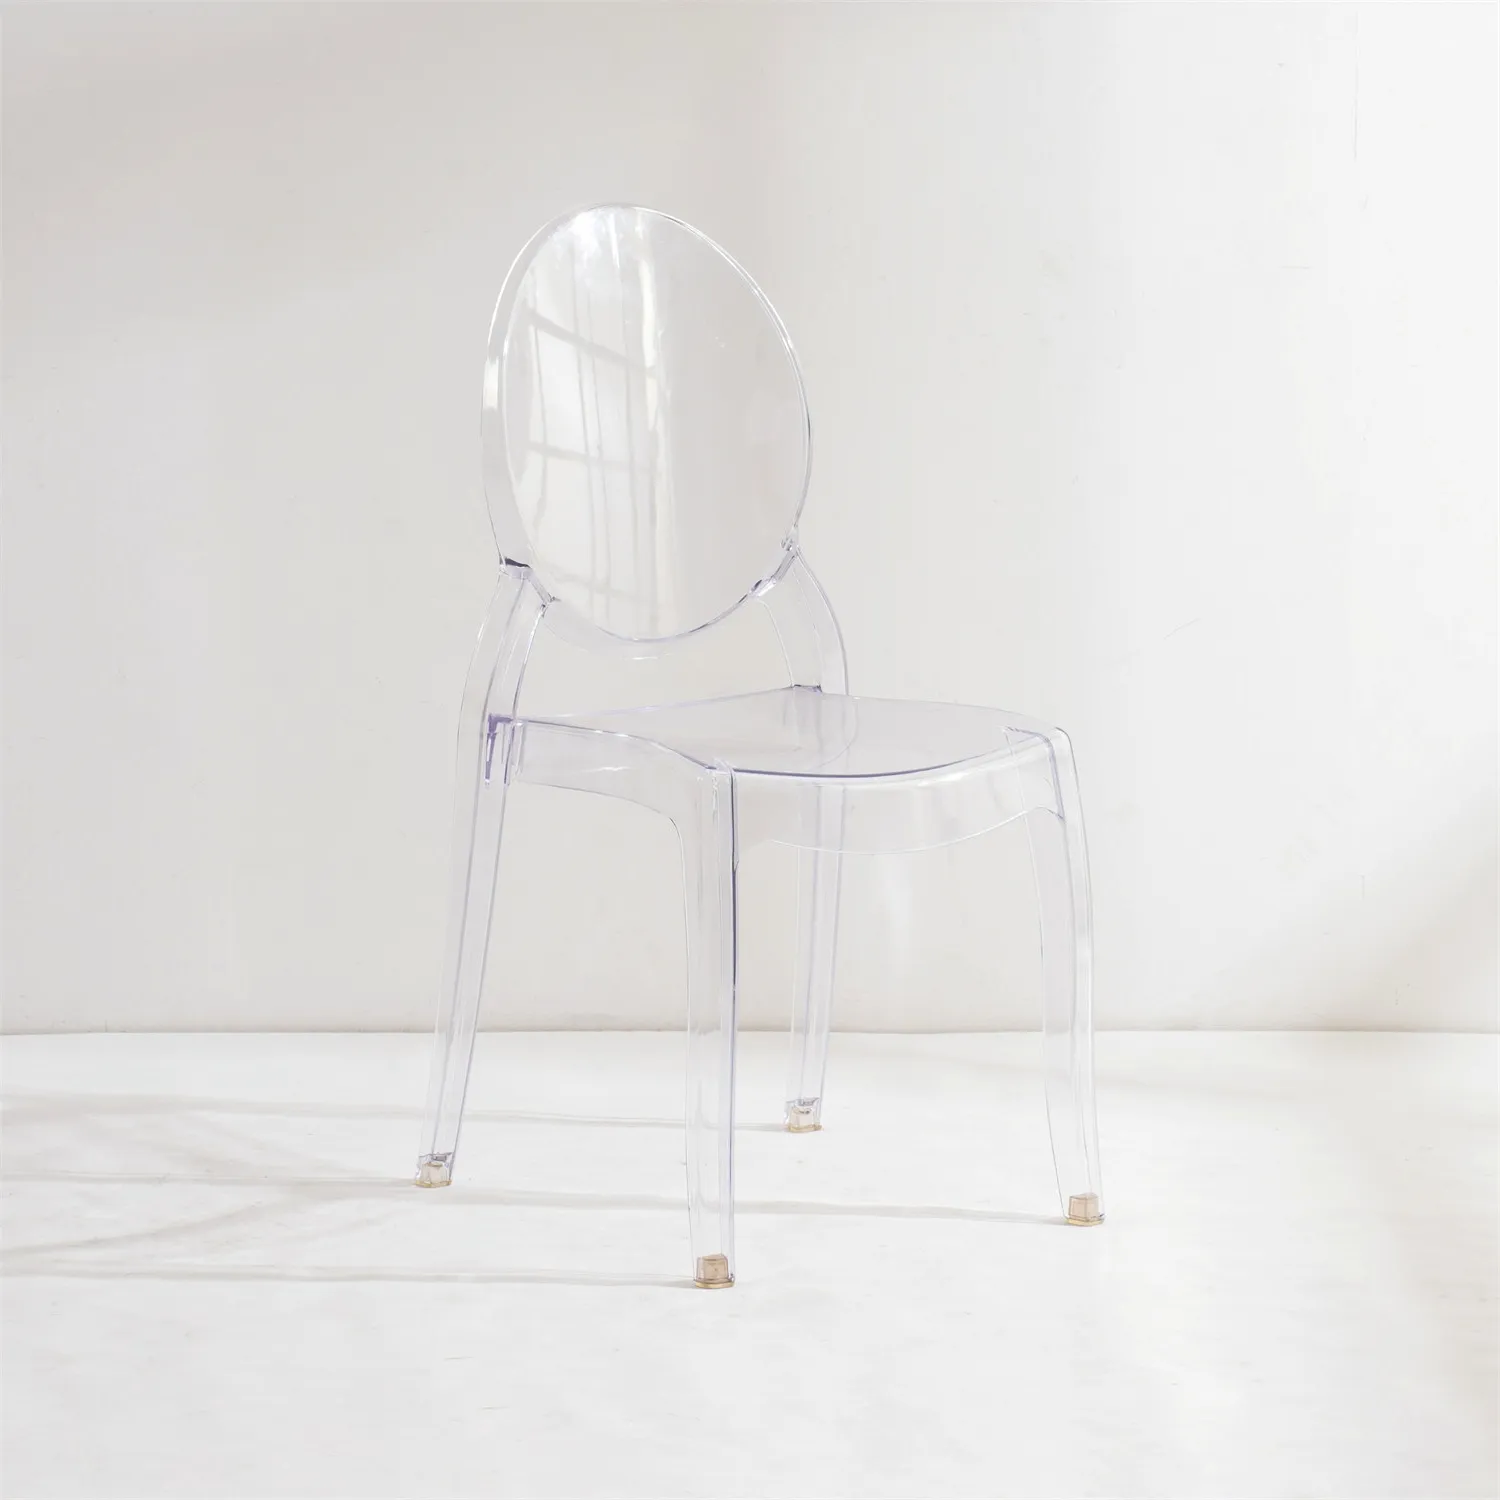 Venta al por mayor Bazhou muebles modernos de resina plástica fiesta transparente acrílico fantasma boda silla transparente para eventos